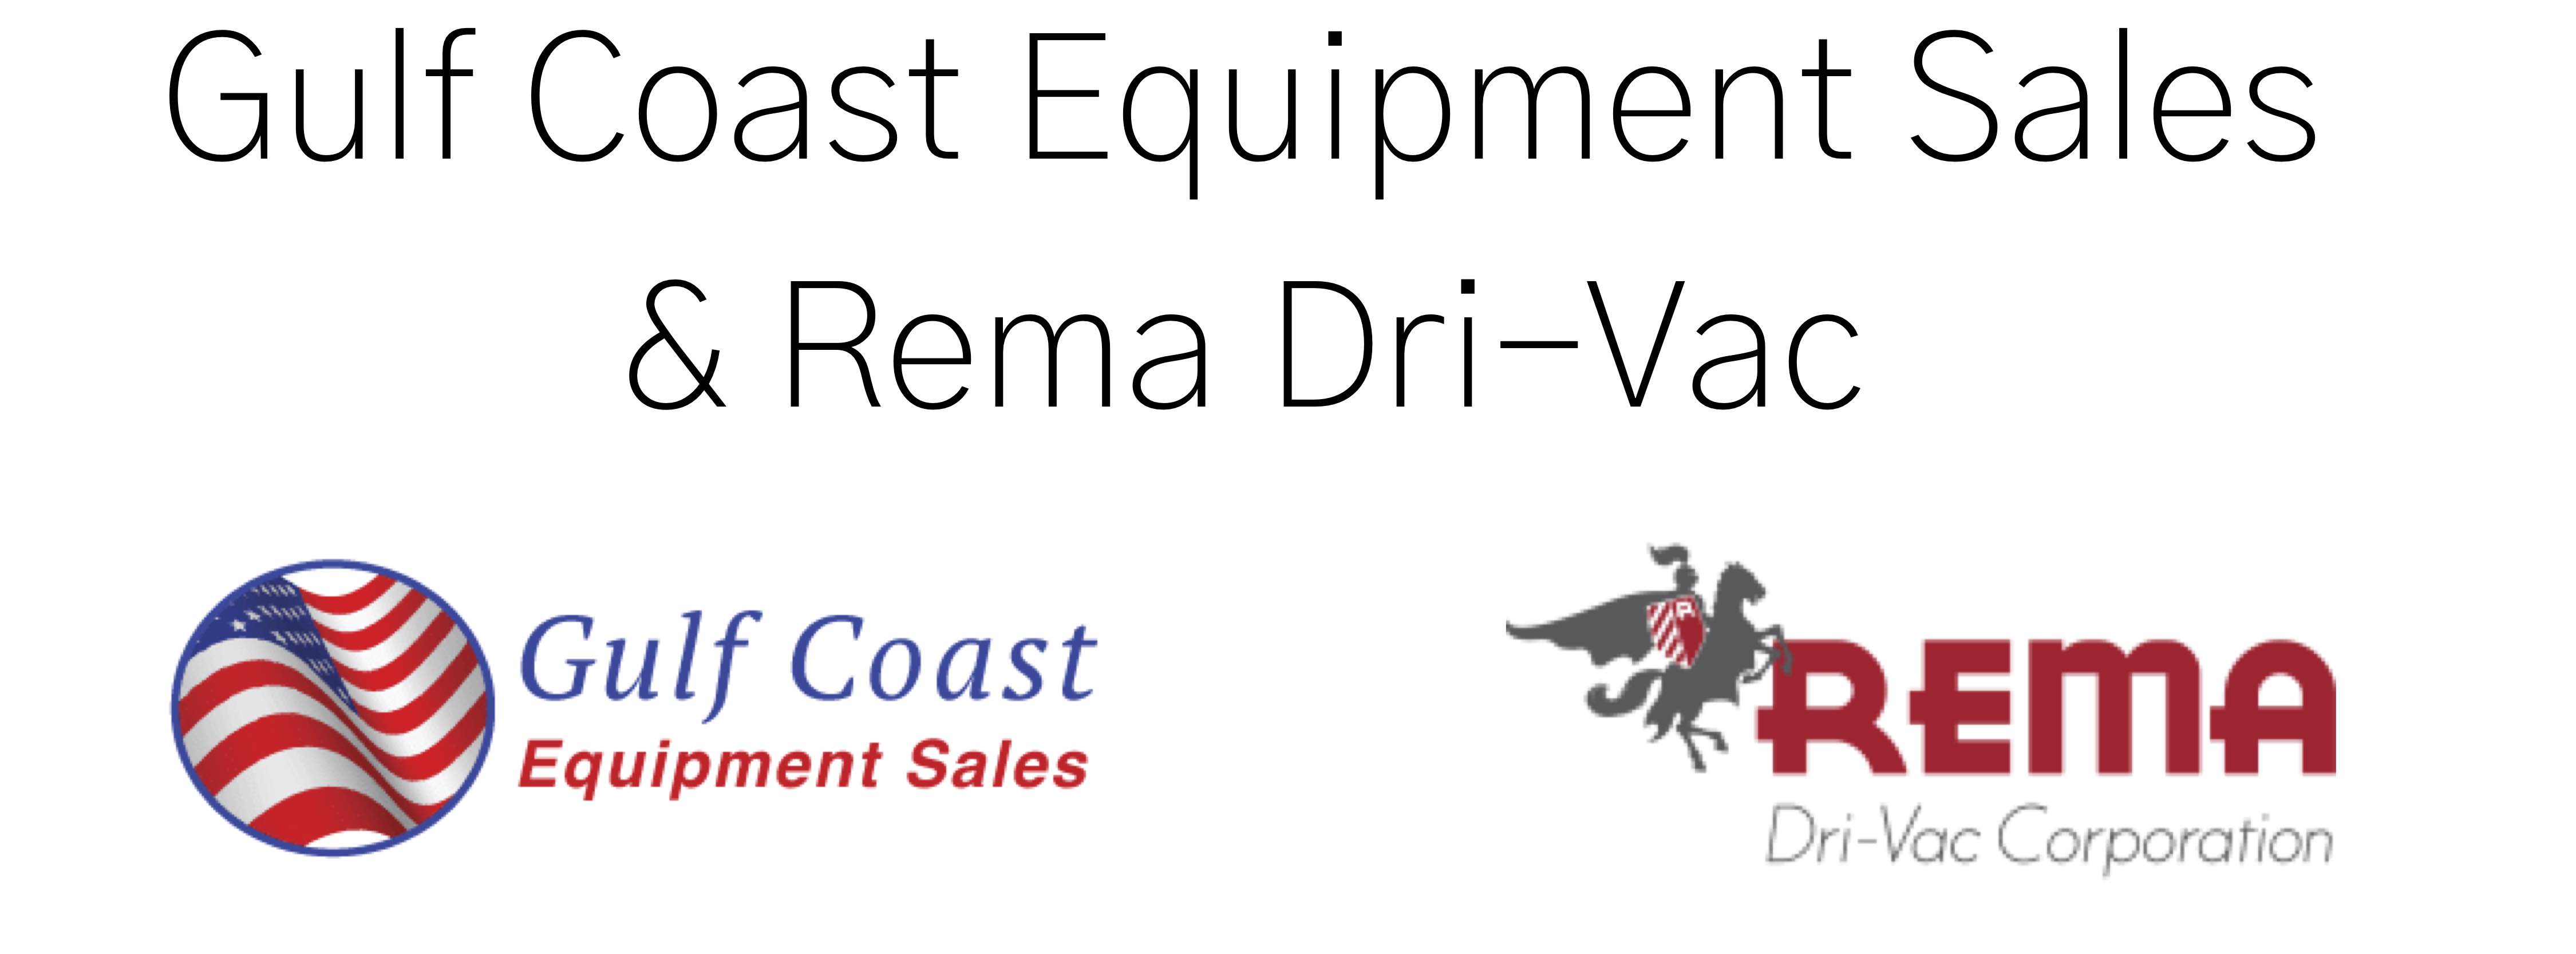 gulf coast equipment sales and rema dri-vac corporation logos